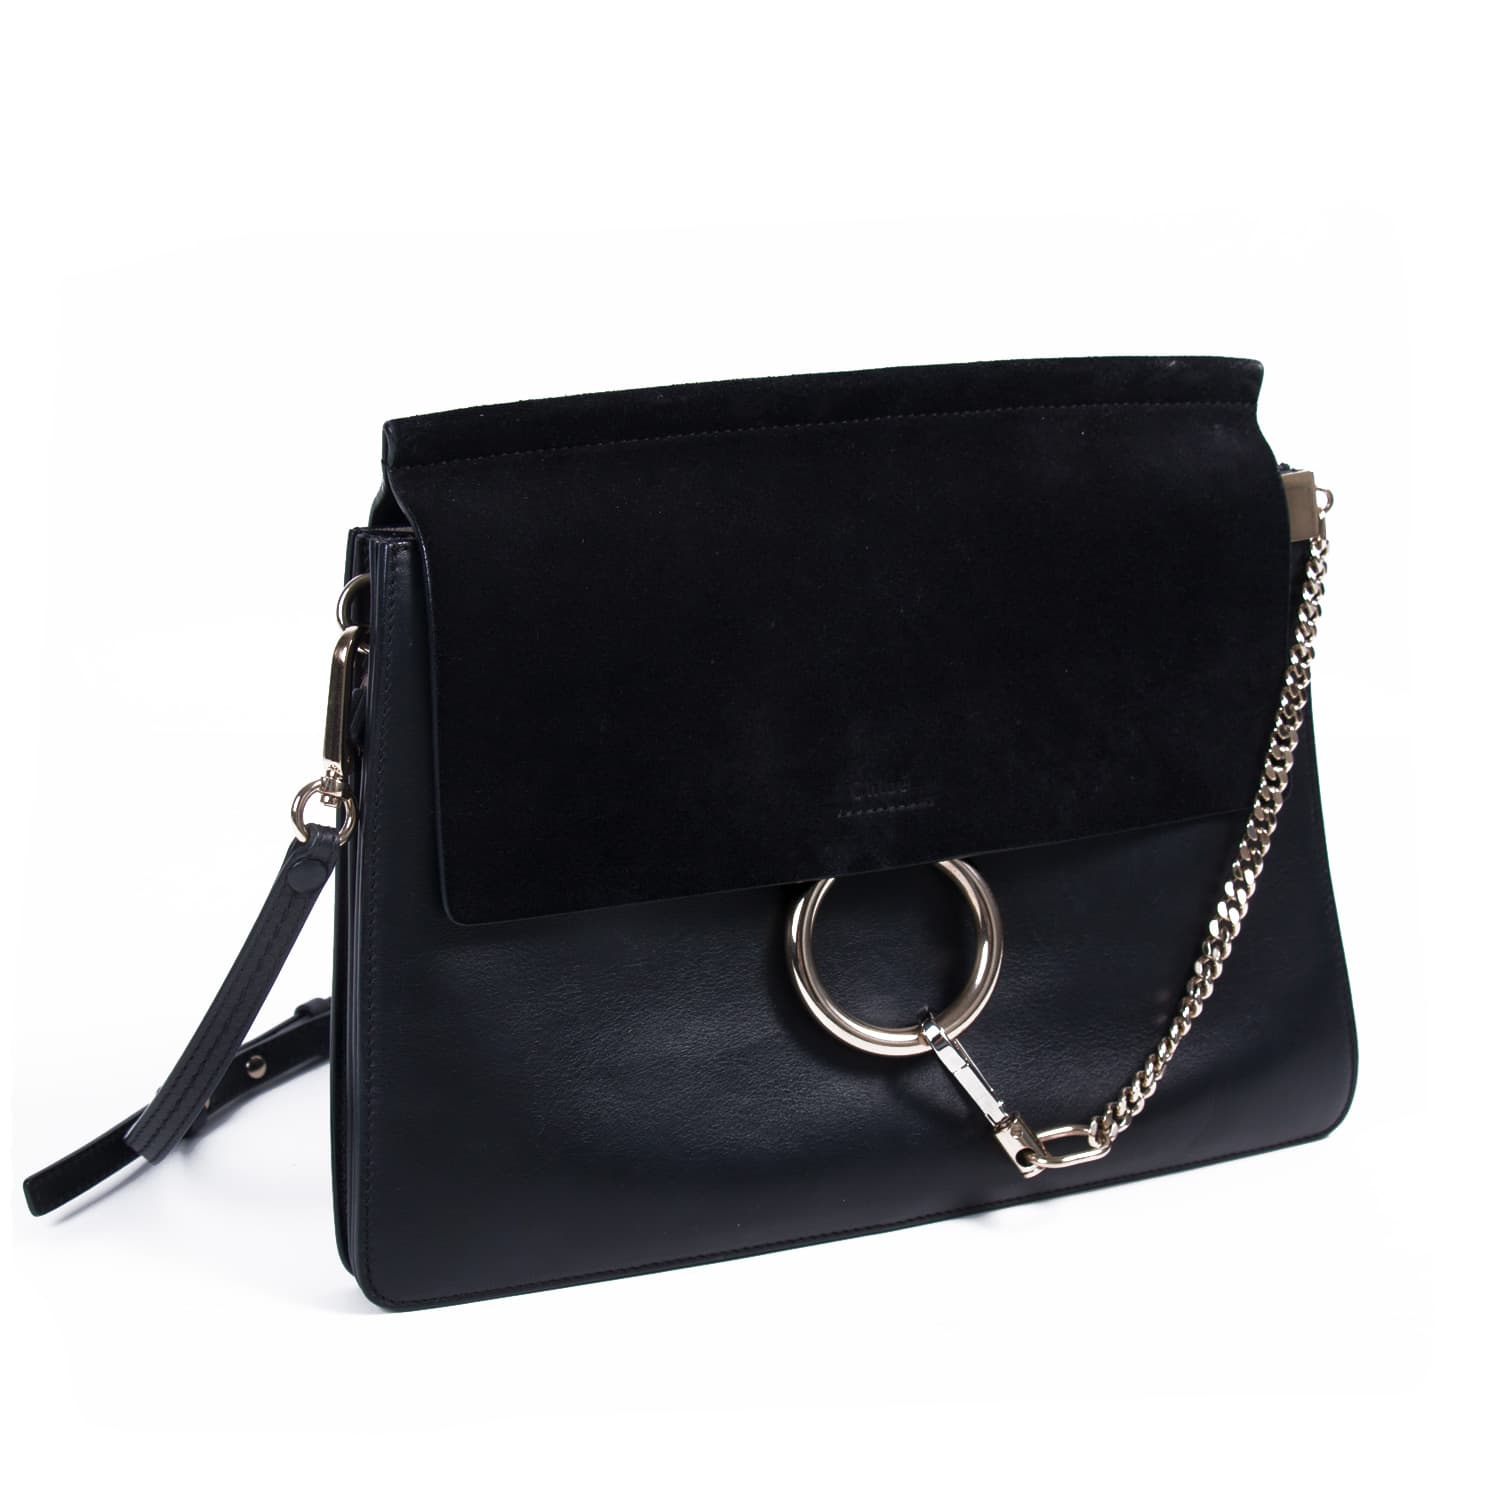 Shop authentic Chloé Medium Faye Bag at revogue for just USD 950.00